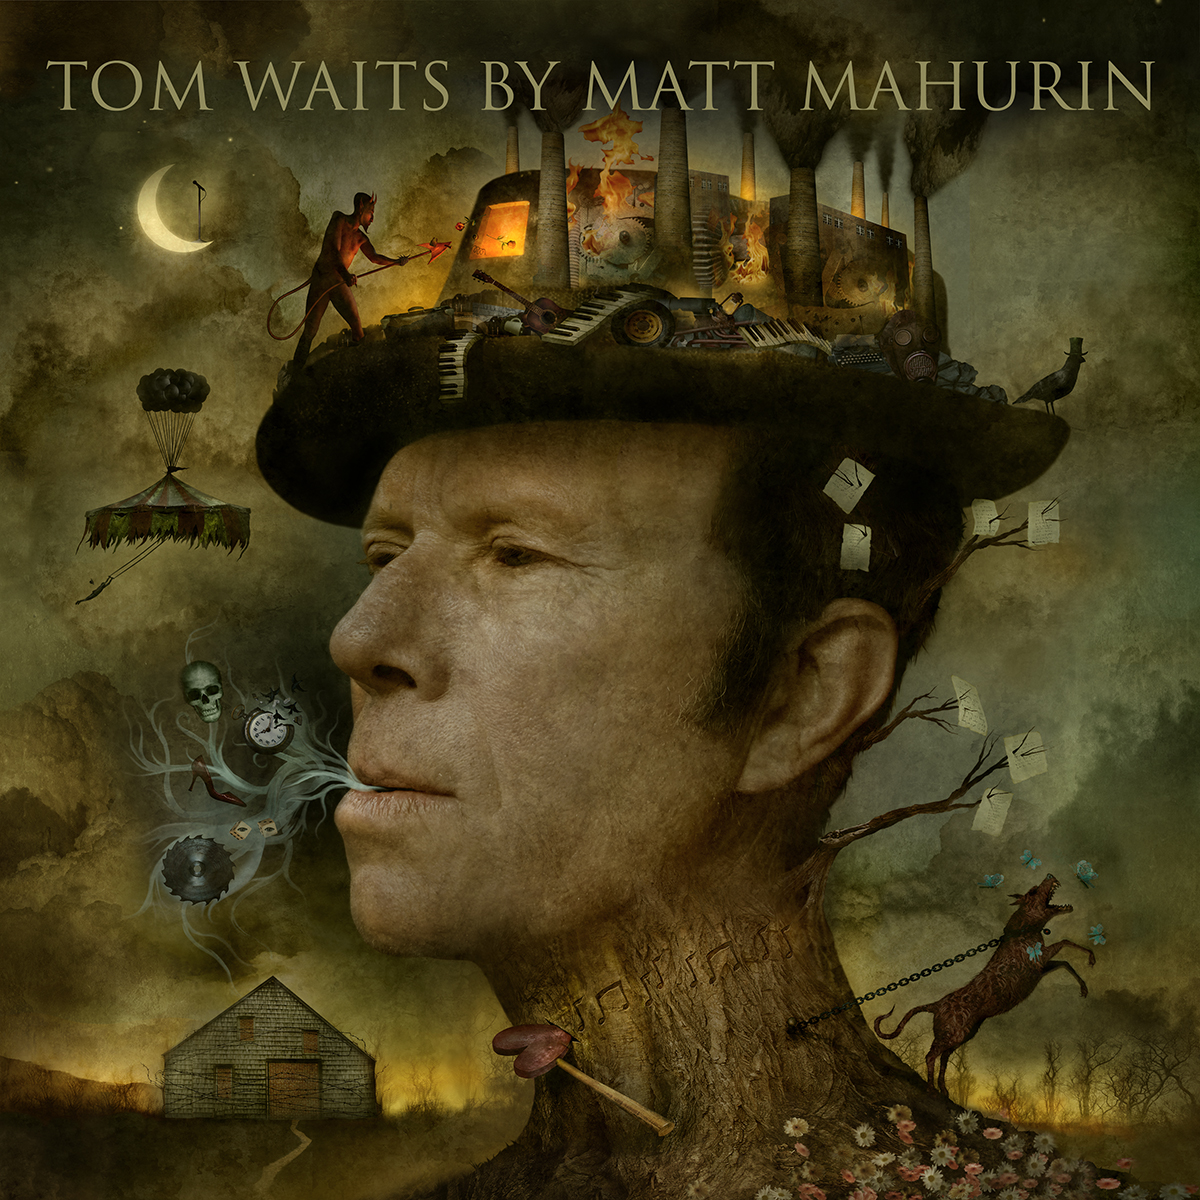 Matt Mahurin - TOM WAITS BY MATT MAHURIN - THE BOOK